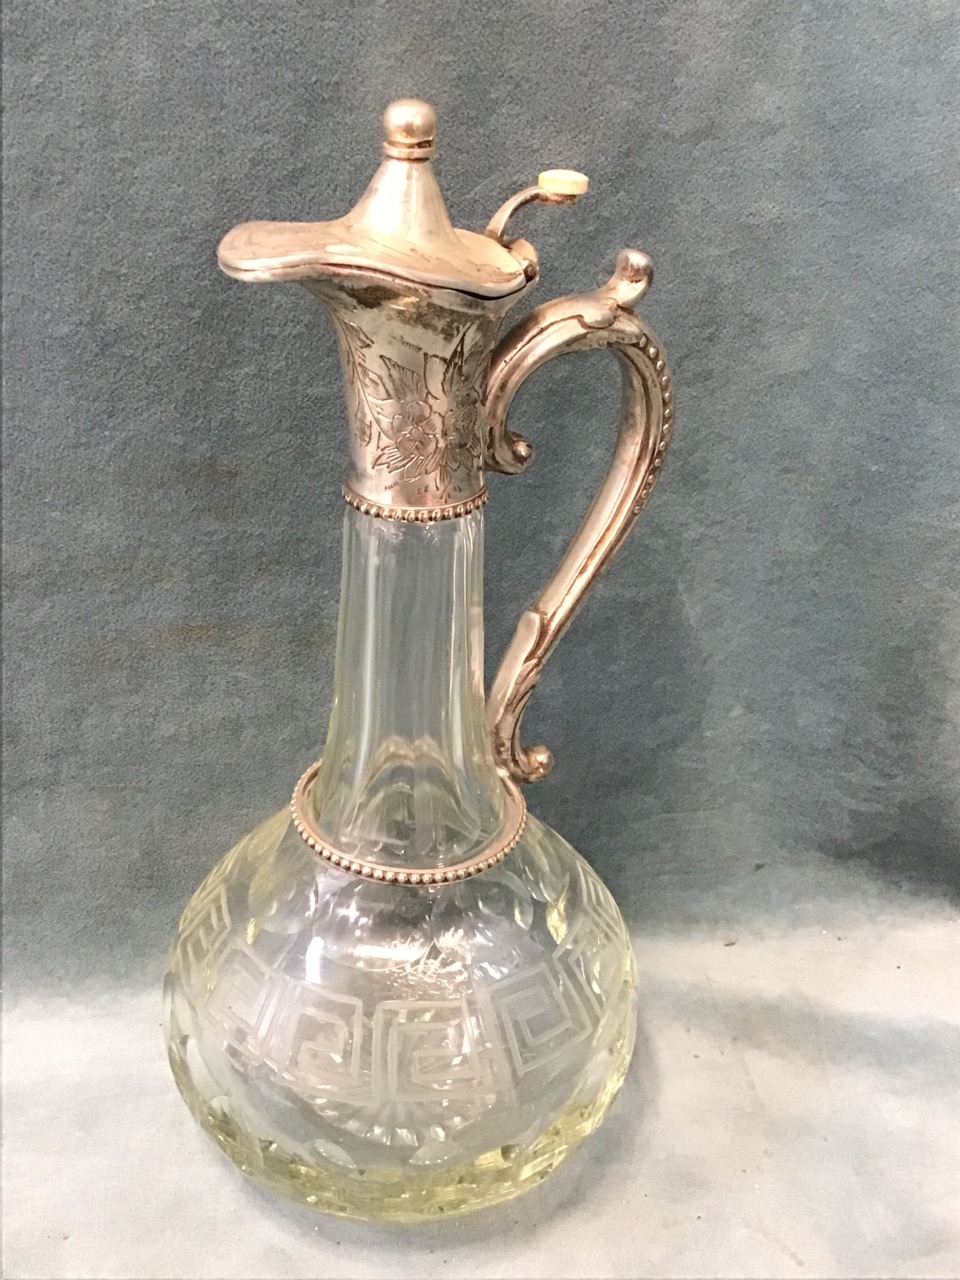 A cut glass globular claret jug with porthole and greek key motifs, having floral engraved silver